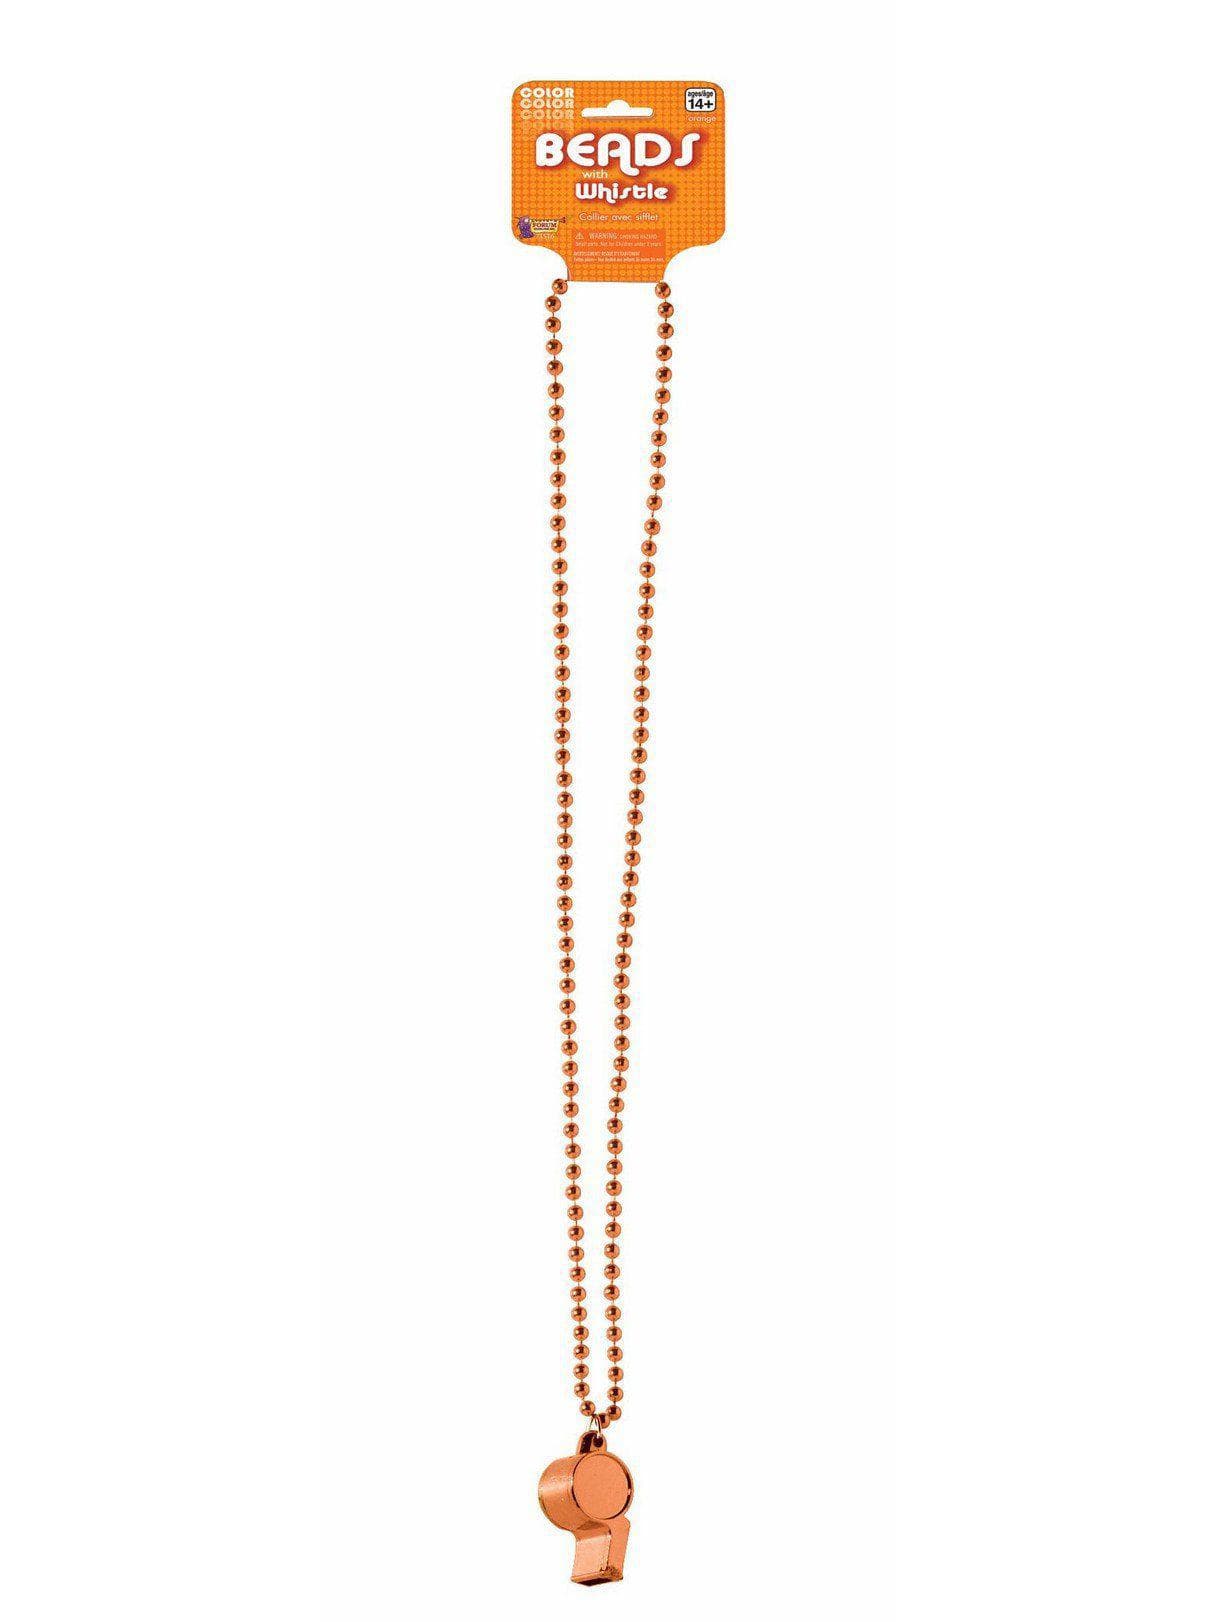 Orange Whistle Accessory - costumes.com